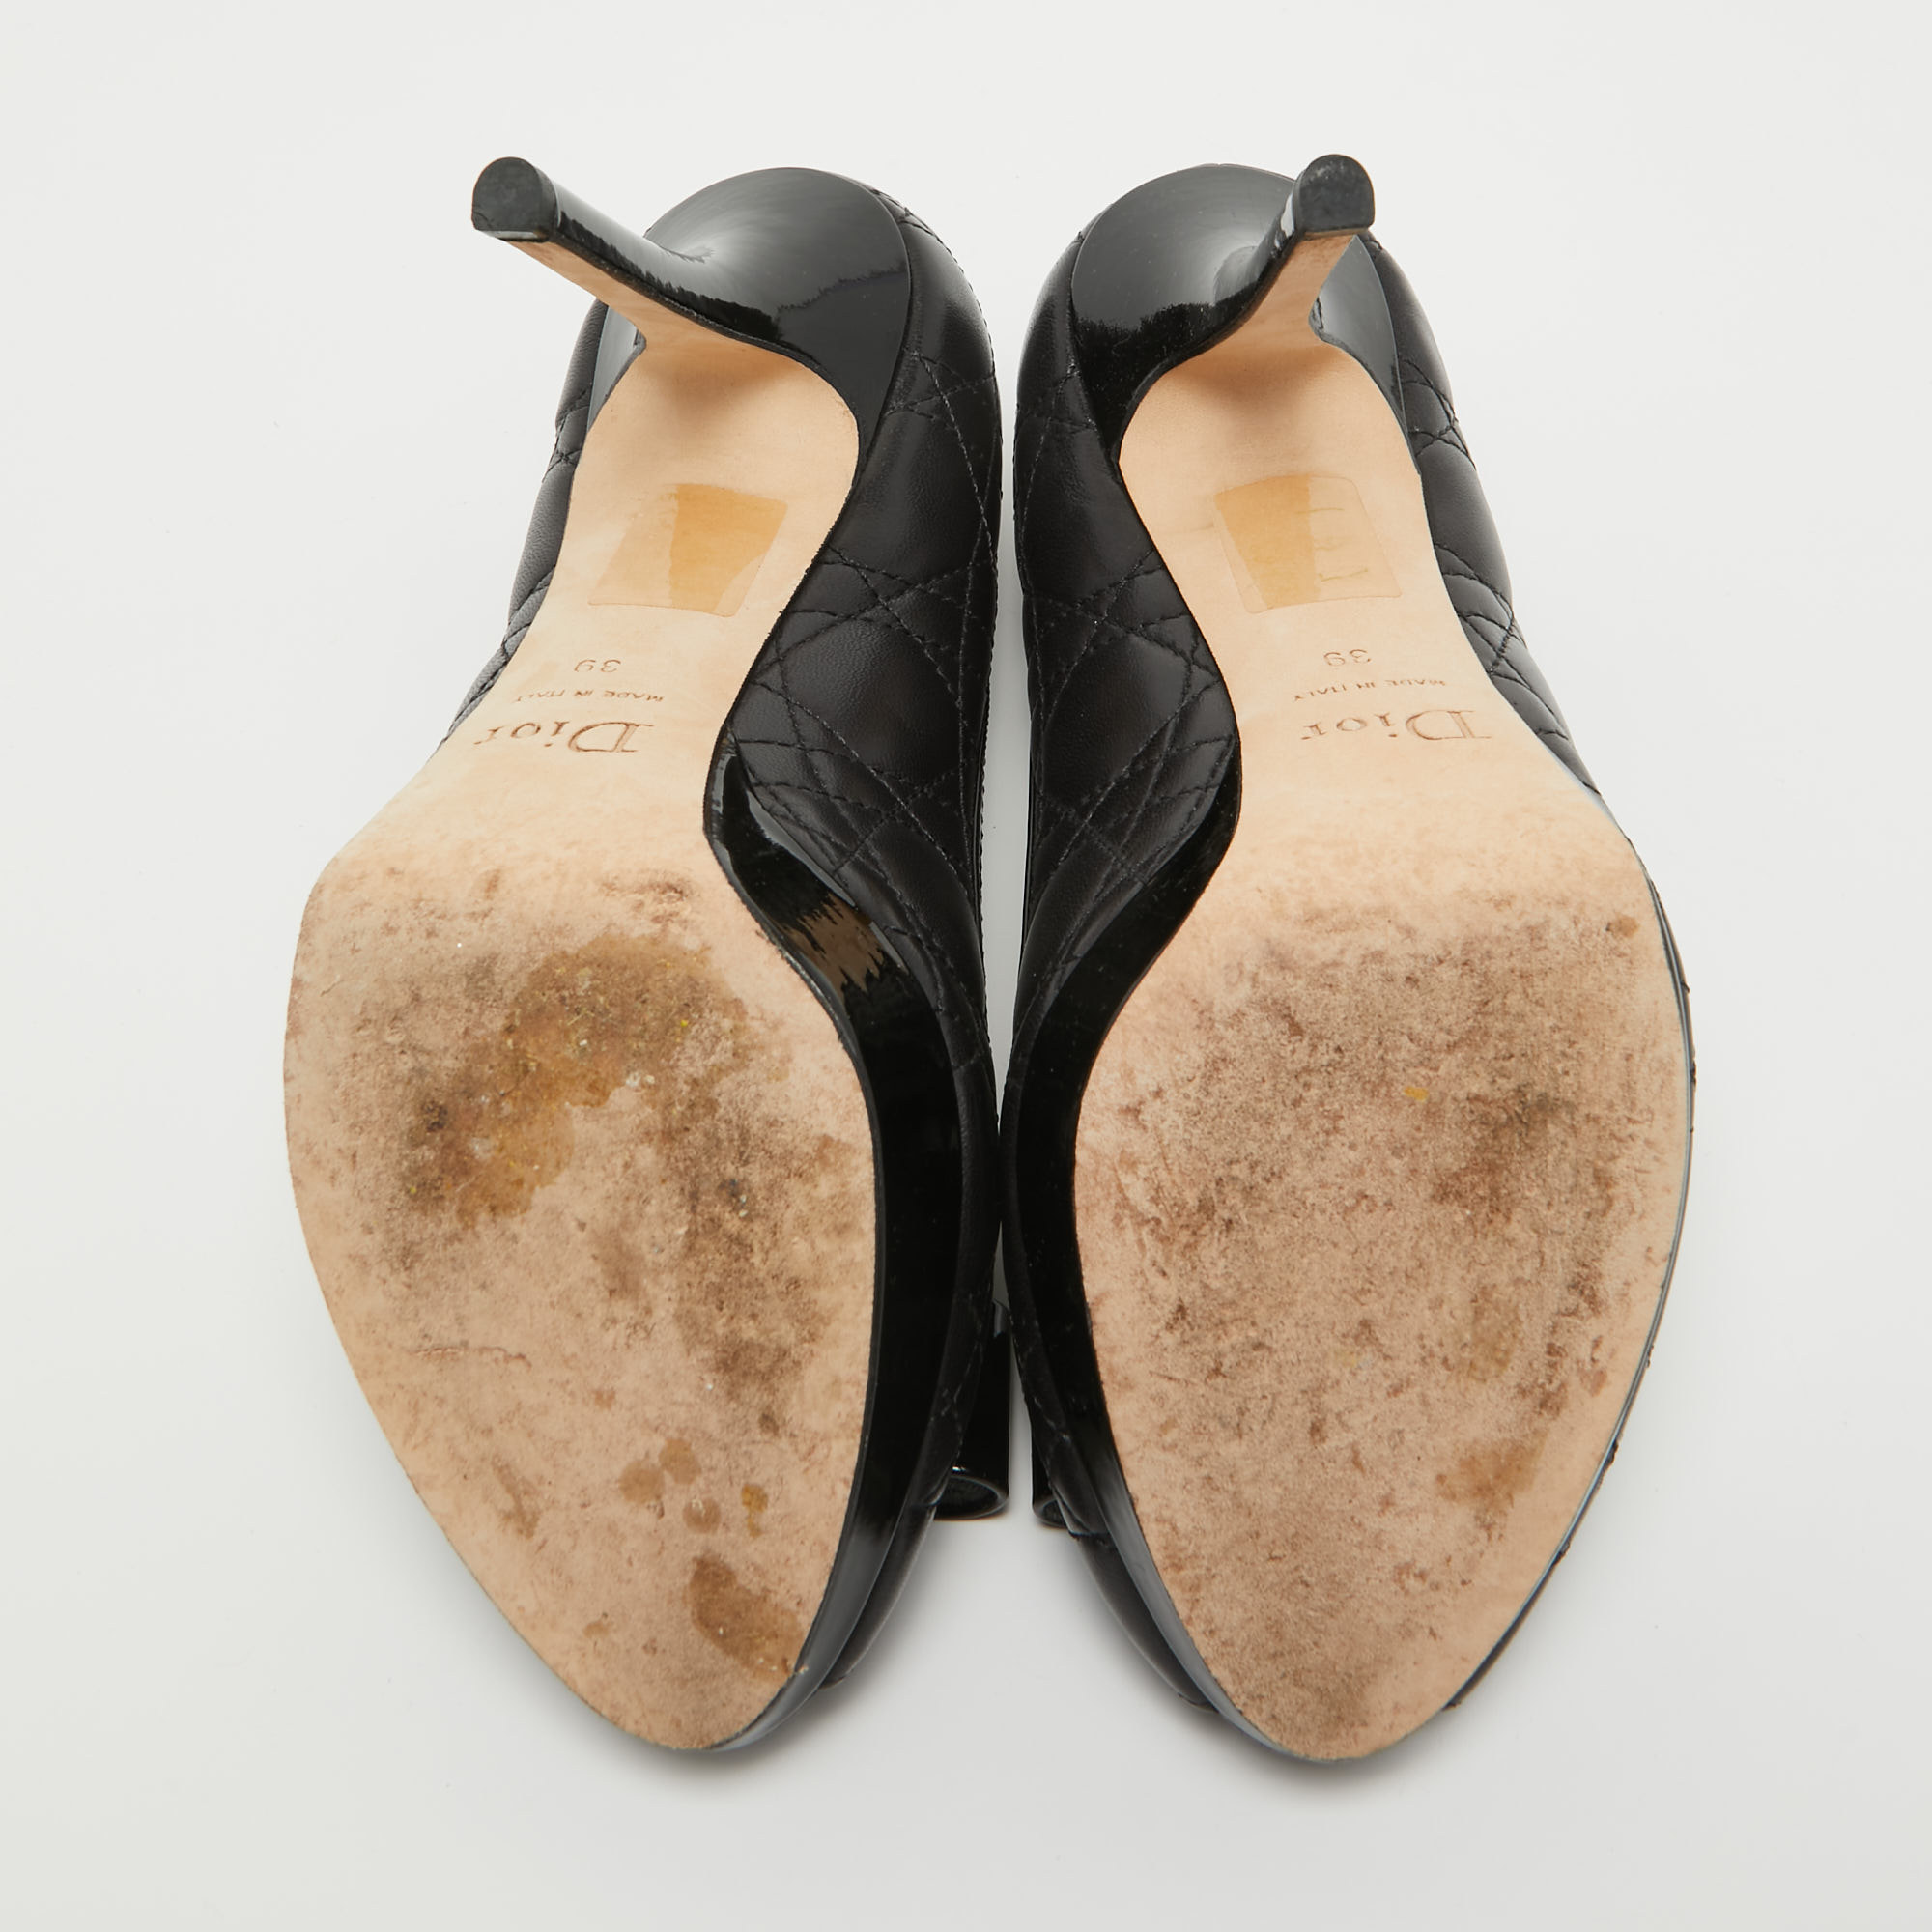 Dior Black Cannage Leather Bow Peep Toe Pumps Size 39